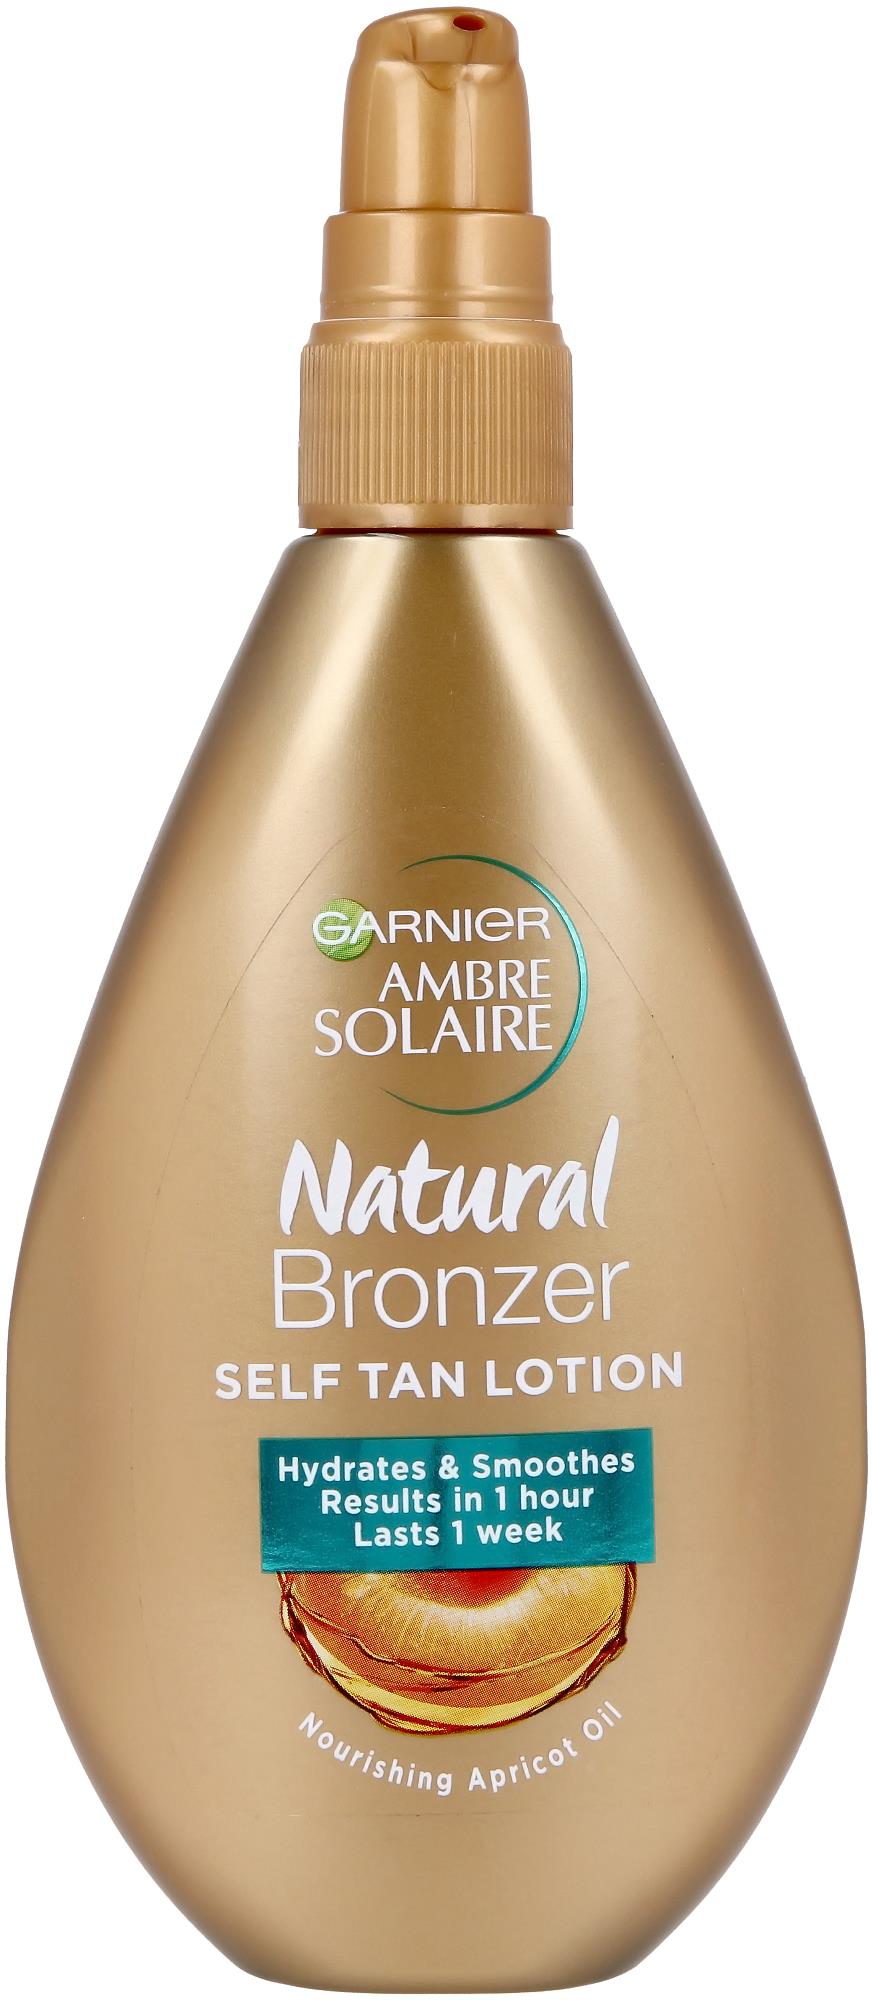 Garnier 150 Self Bronzer Solaire Ambre Lotion Tan Natural ml